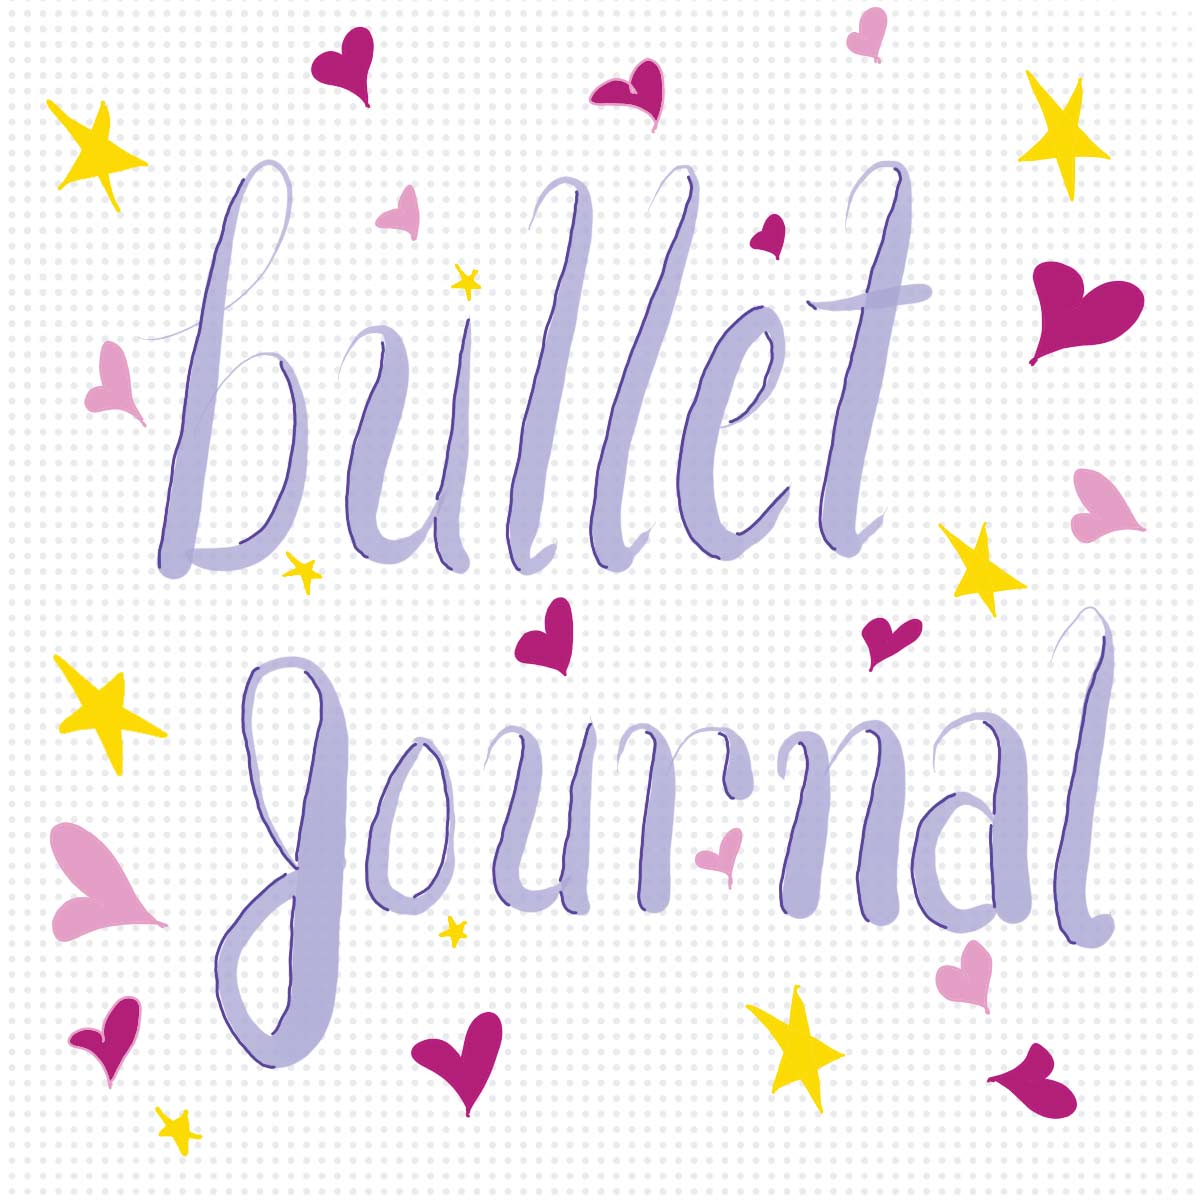 3 Big Benefits Of Bullet Journaling